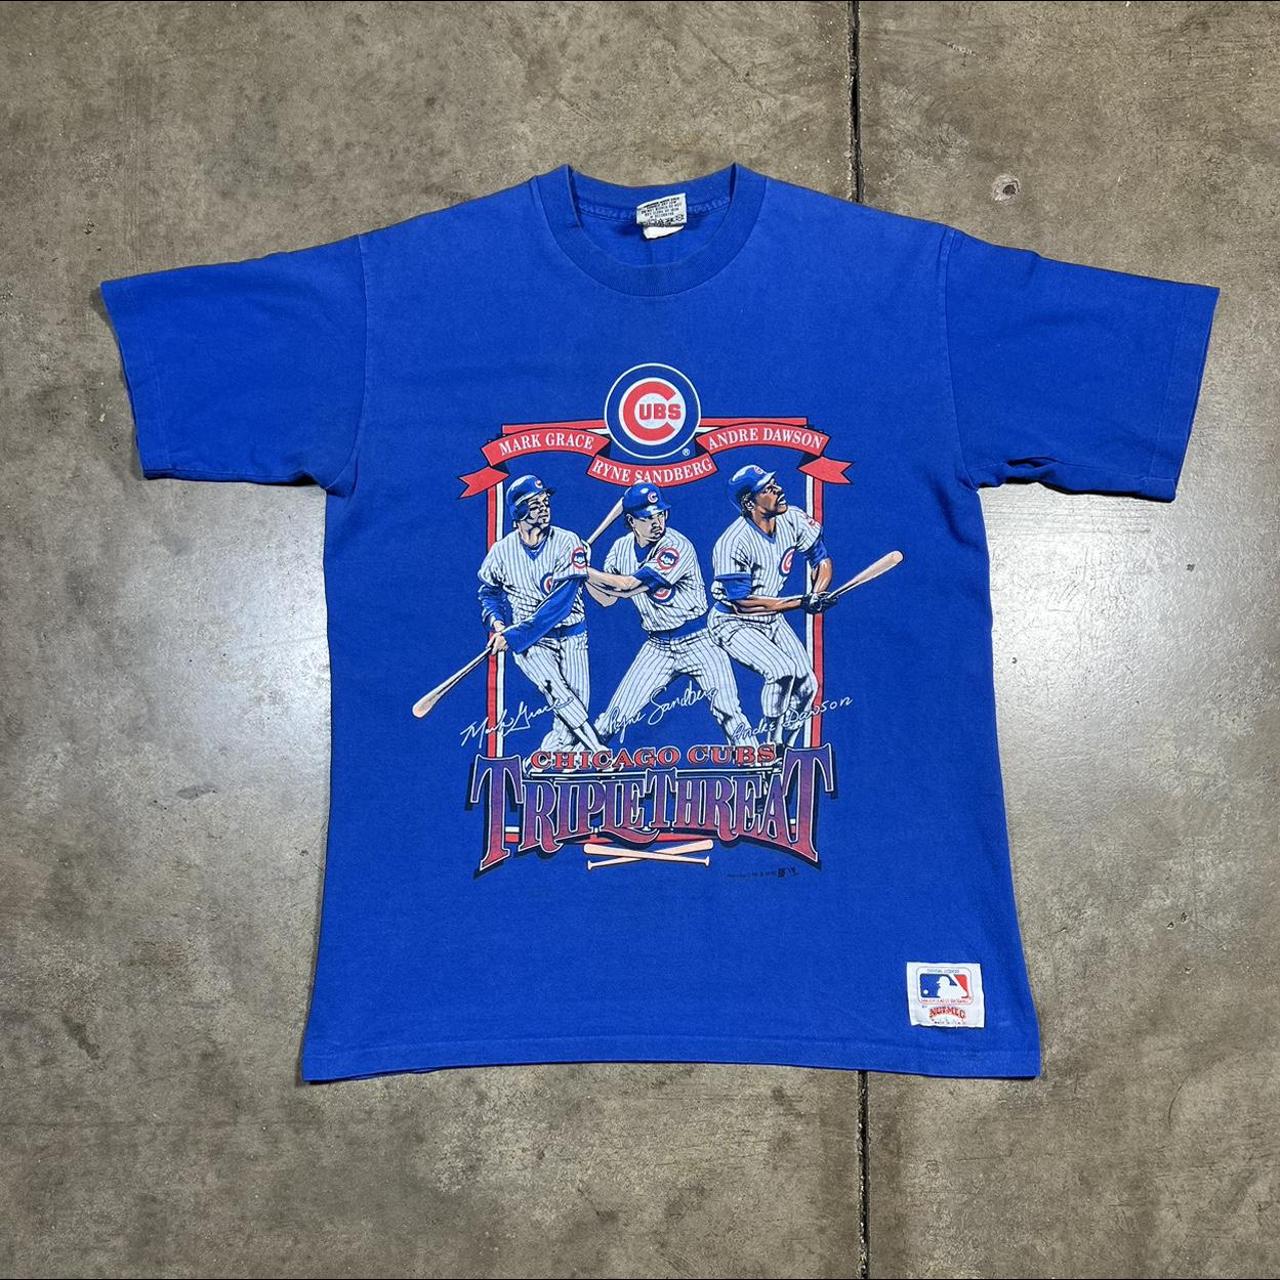 chicago cubs vintage shirt